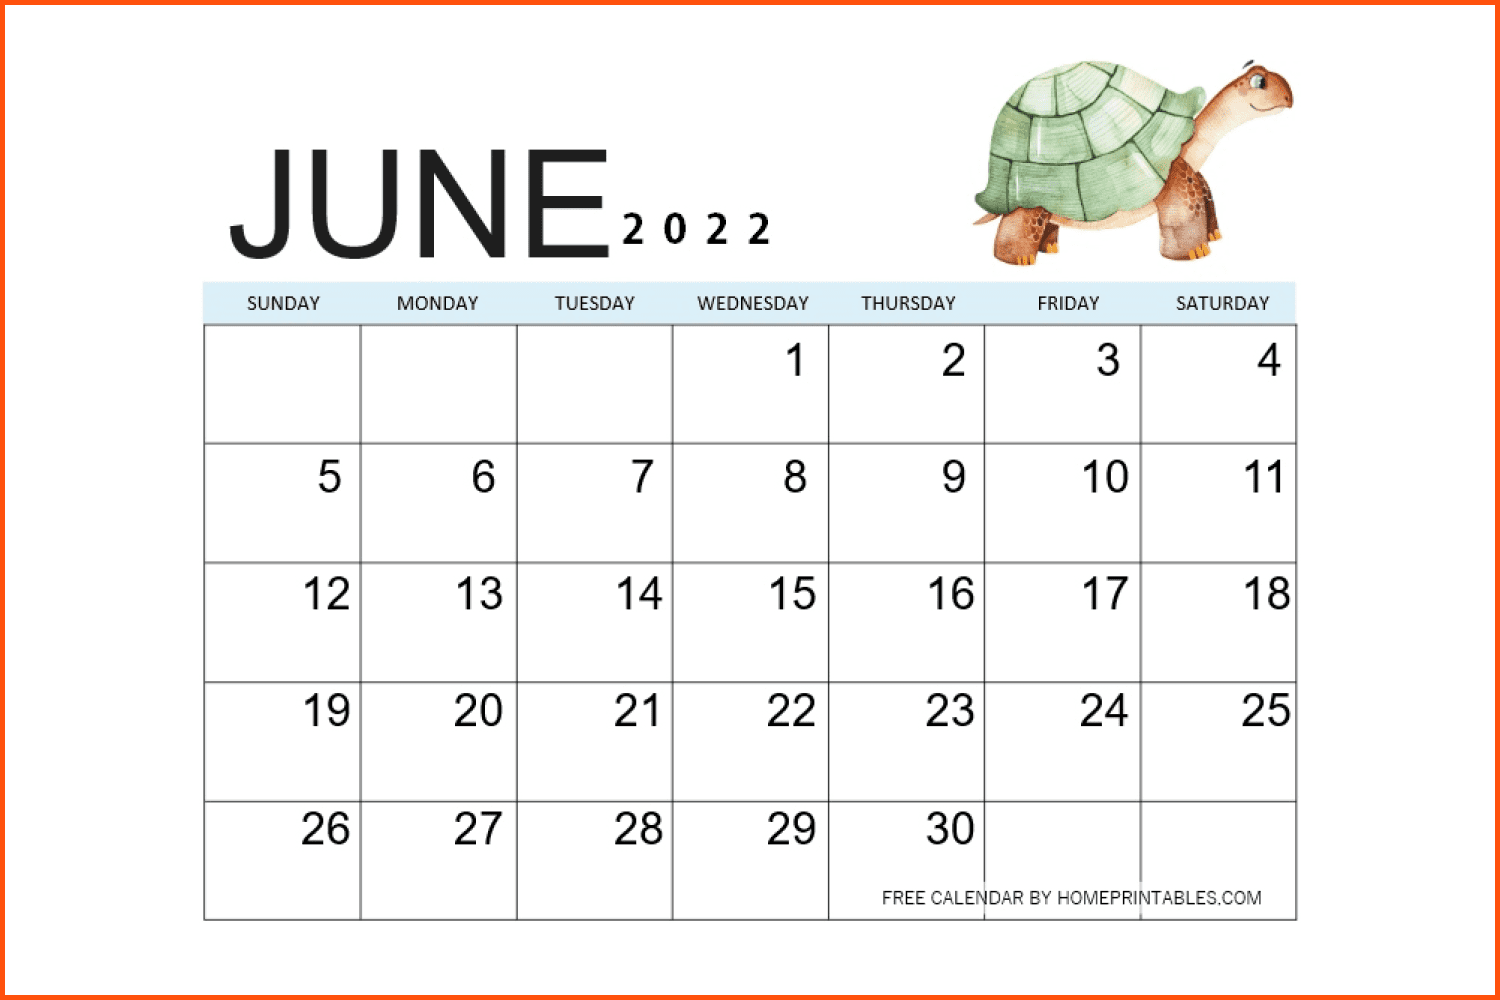 Turtle-Themed Calendar.